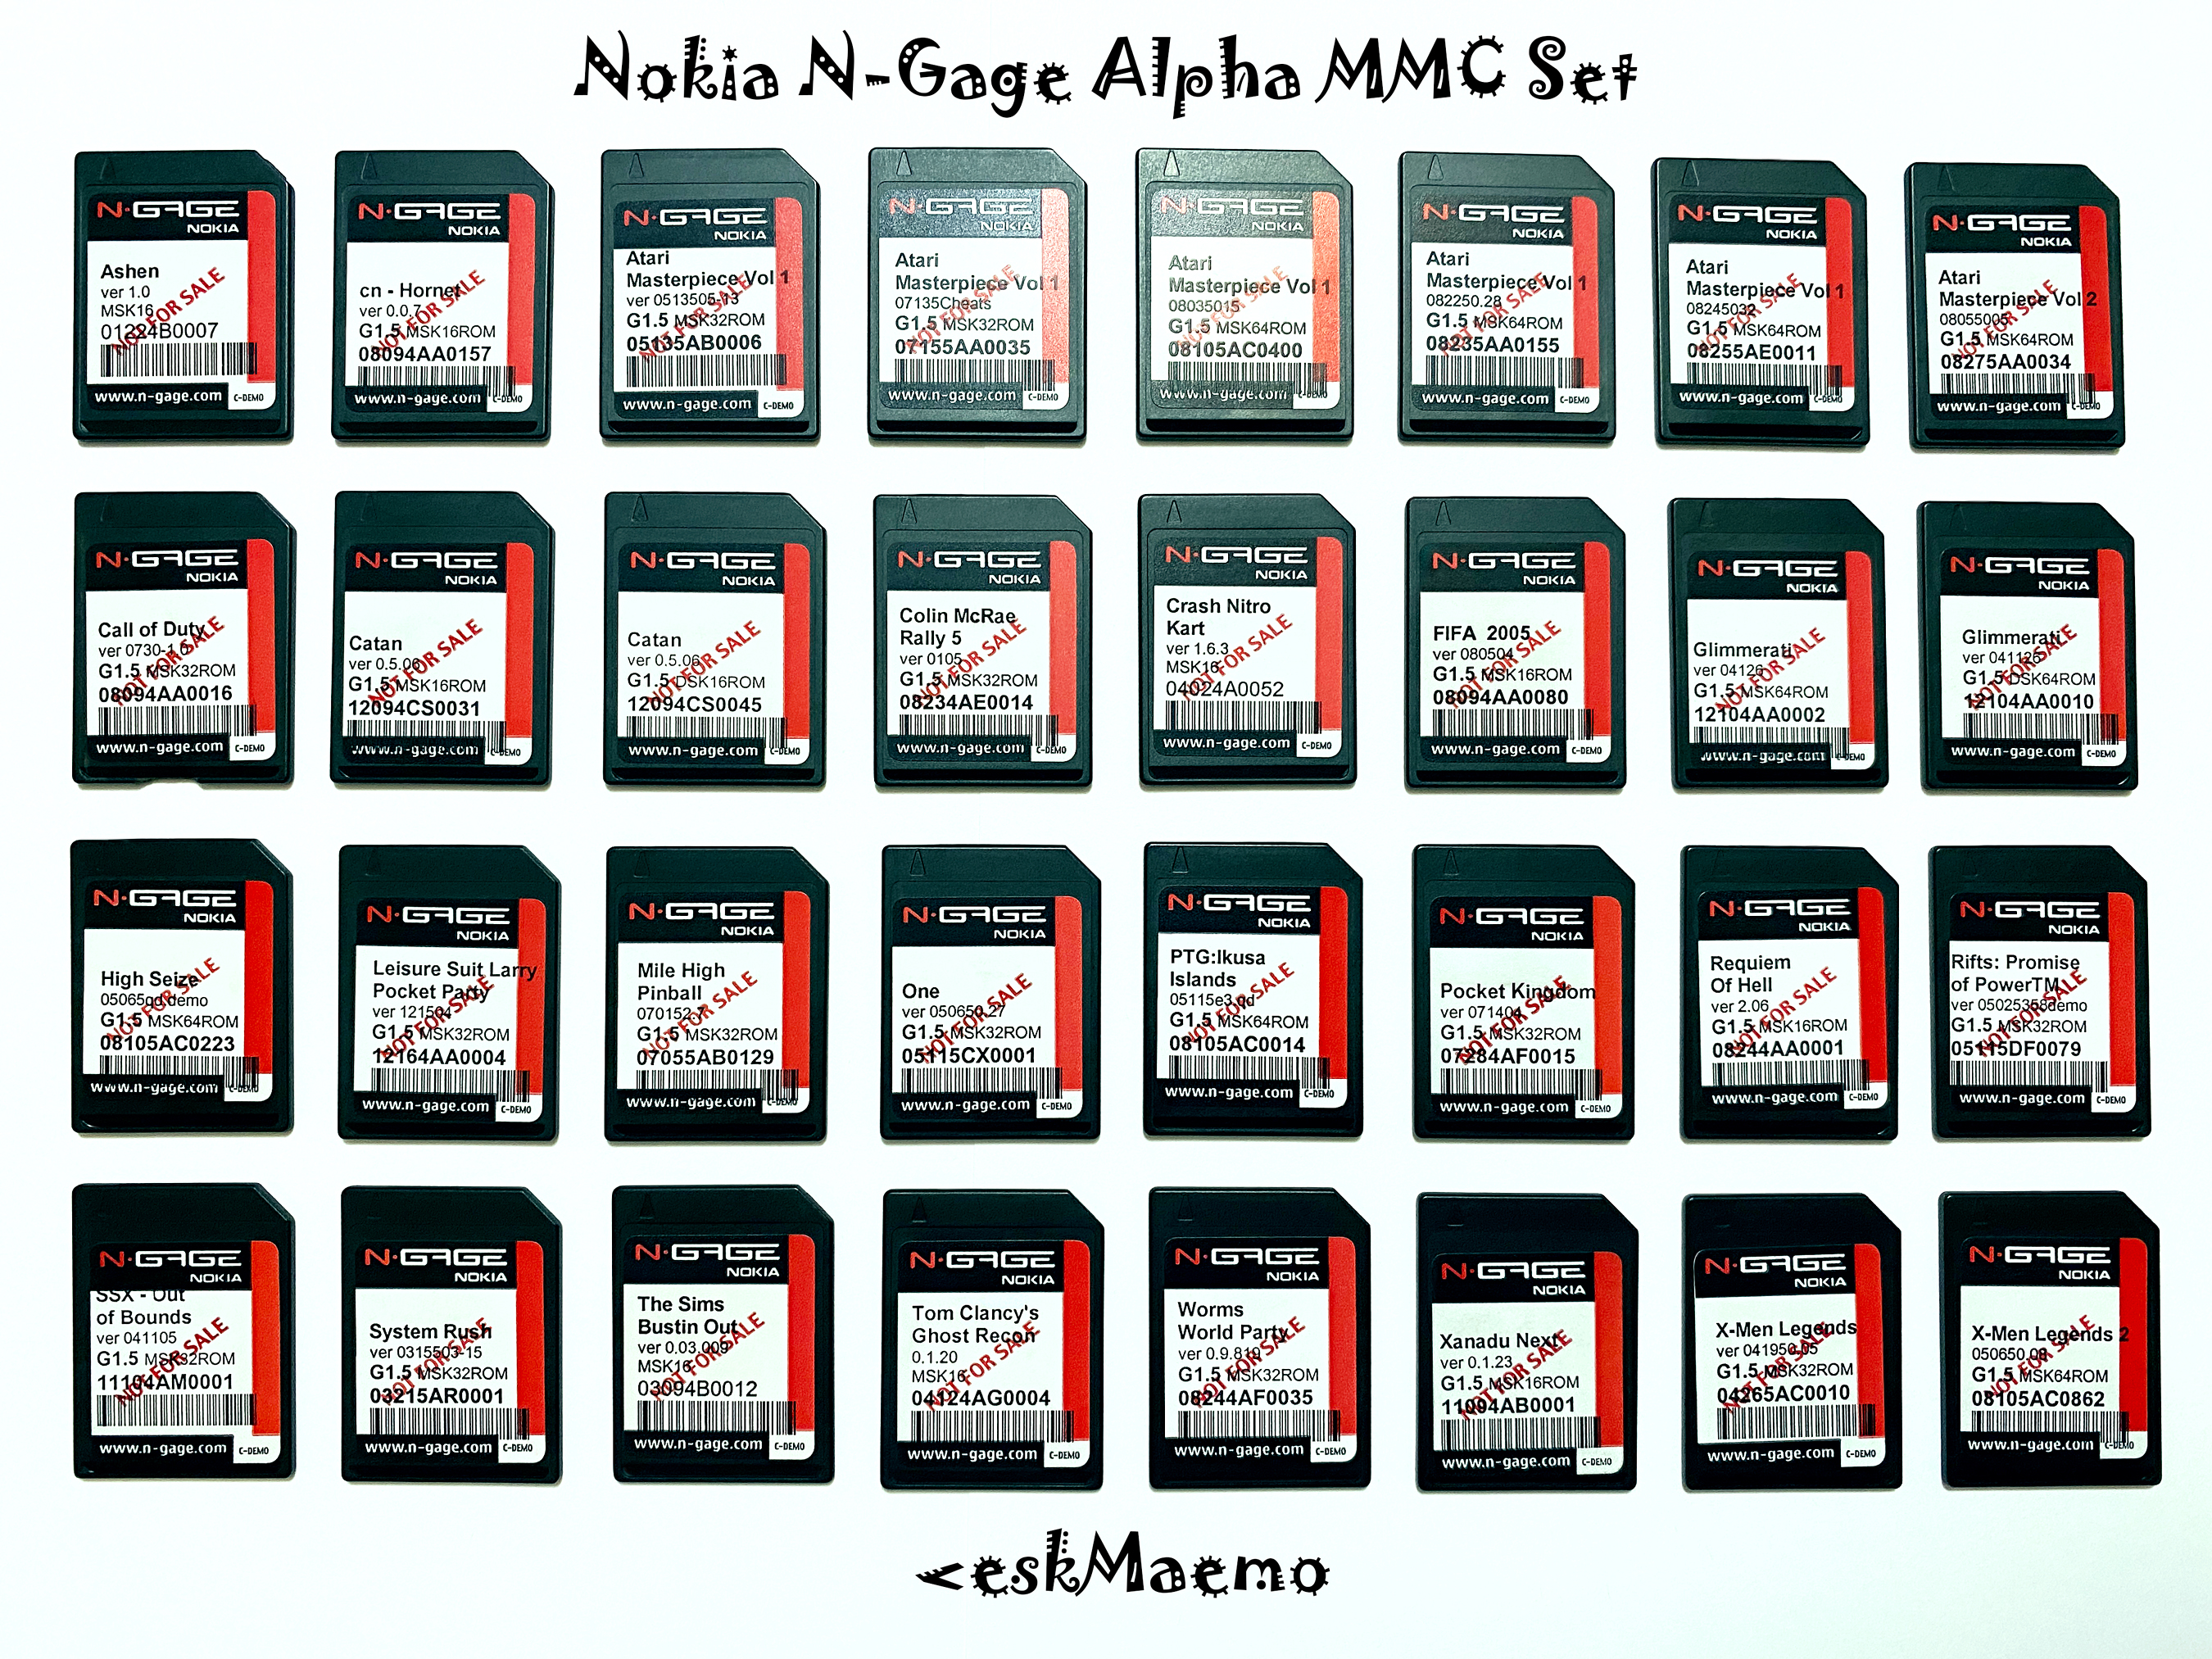 Nokia_N-Gage_Alpha_MMC_Set-eskMaemo.jpg